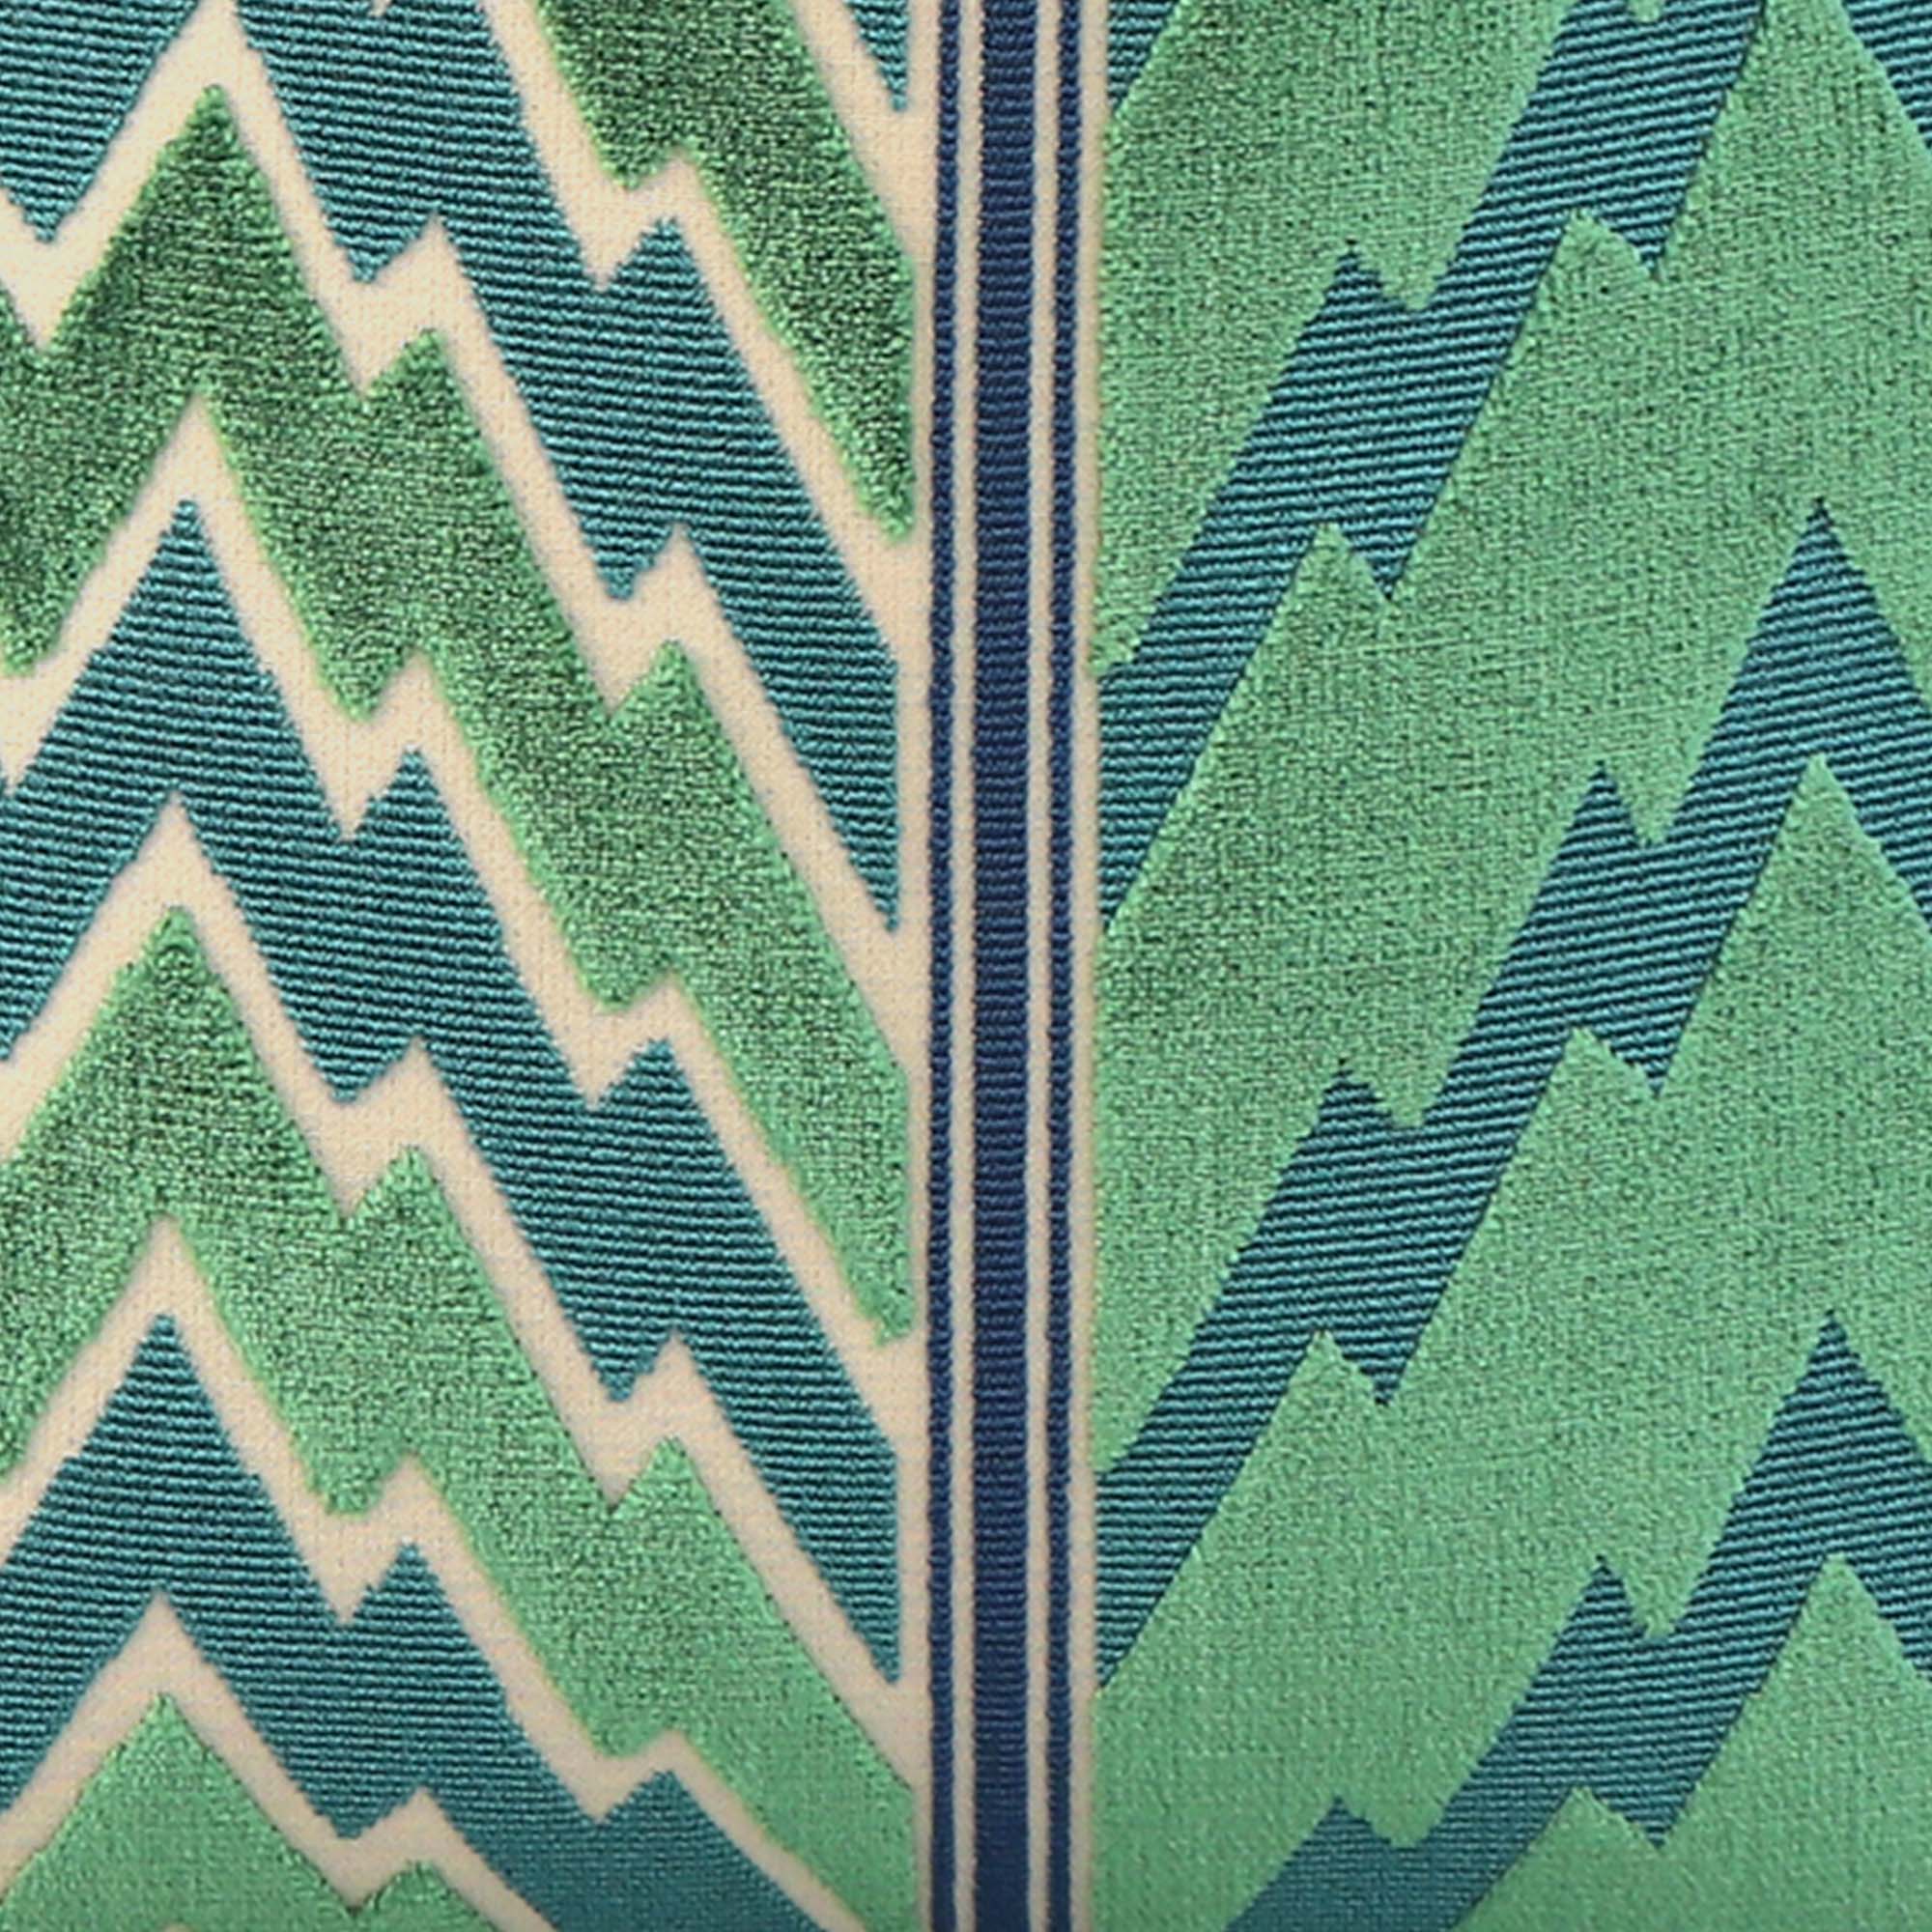 Florentine Velvet Emerald / 4x4 inch Fabric Swatch